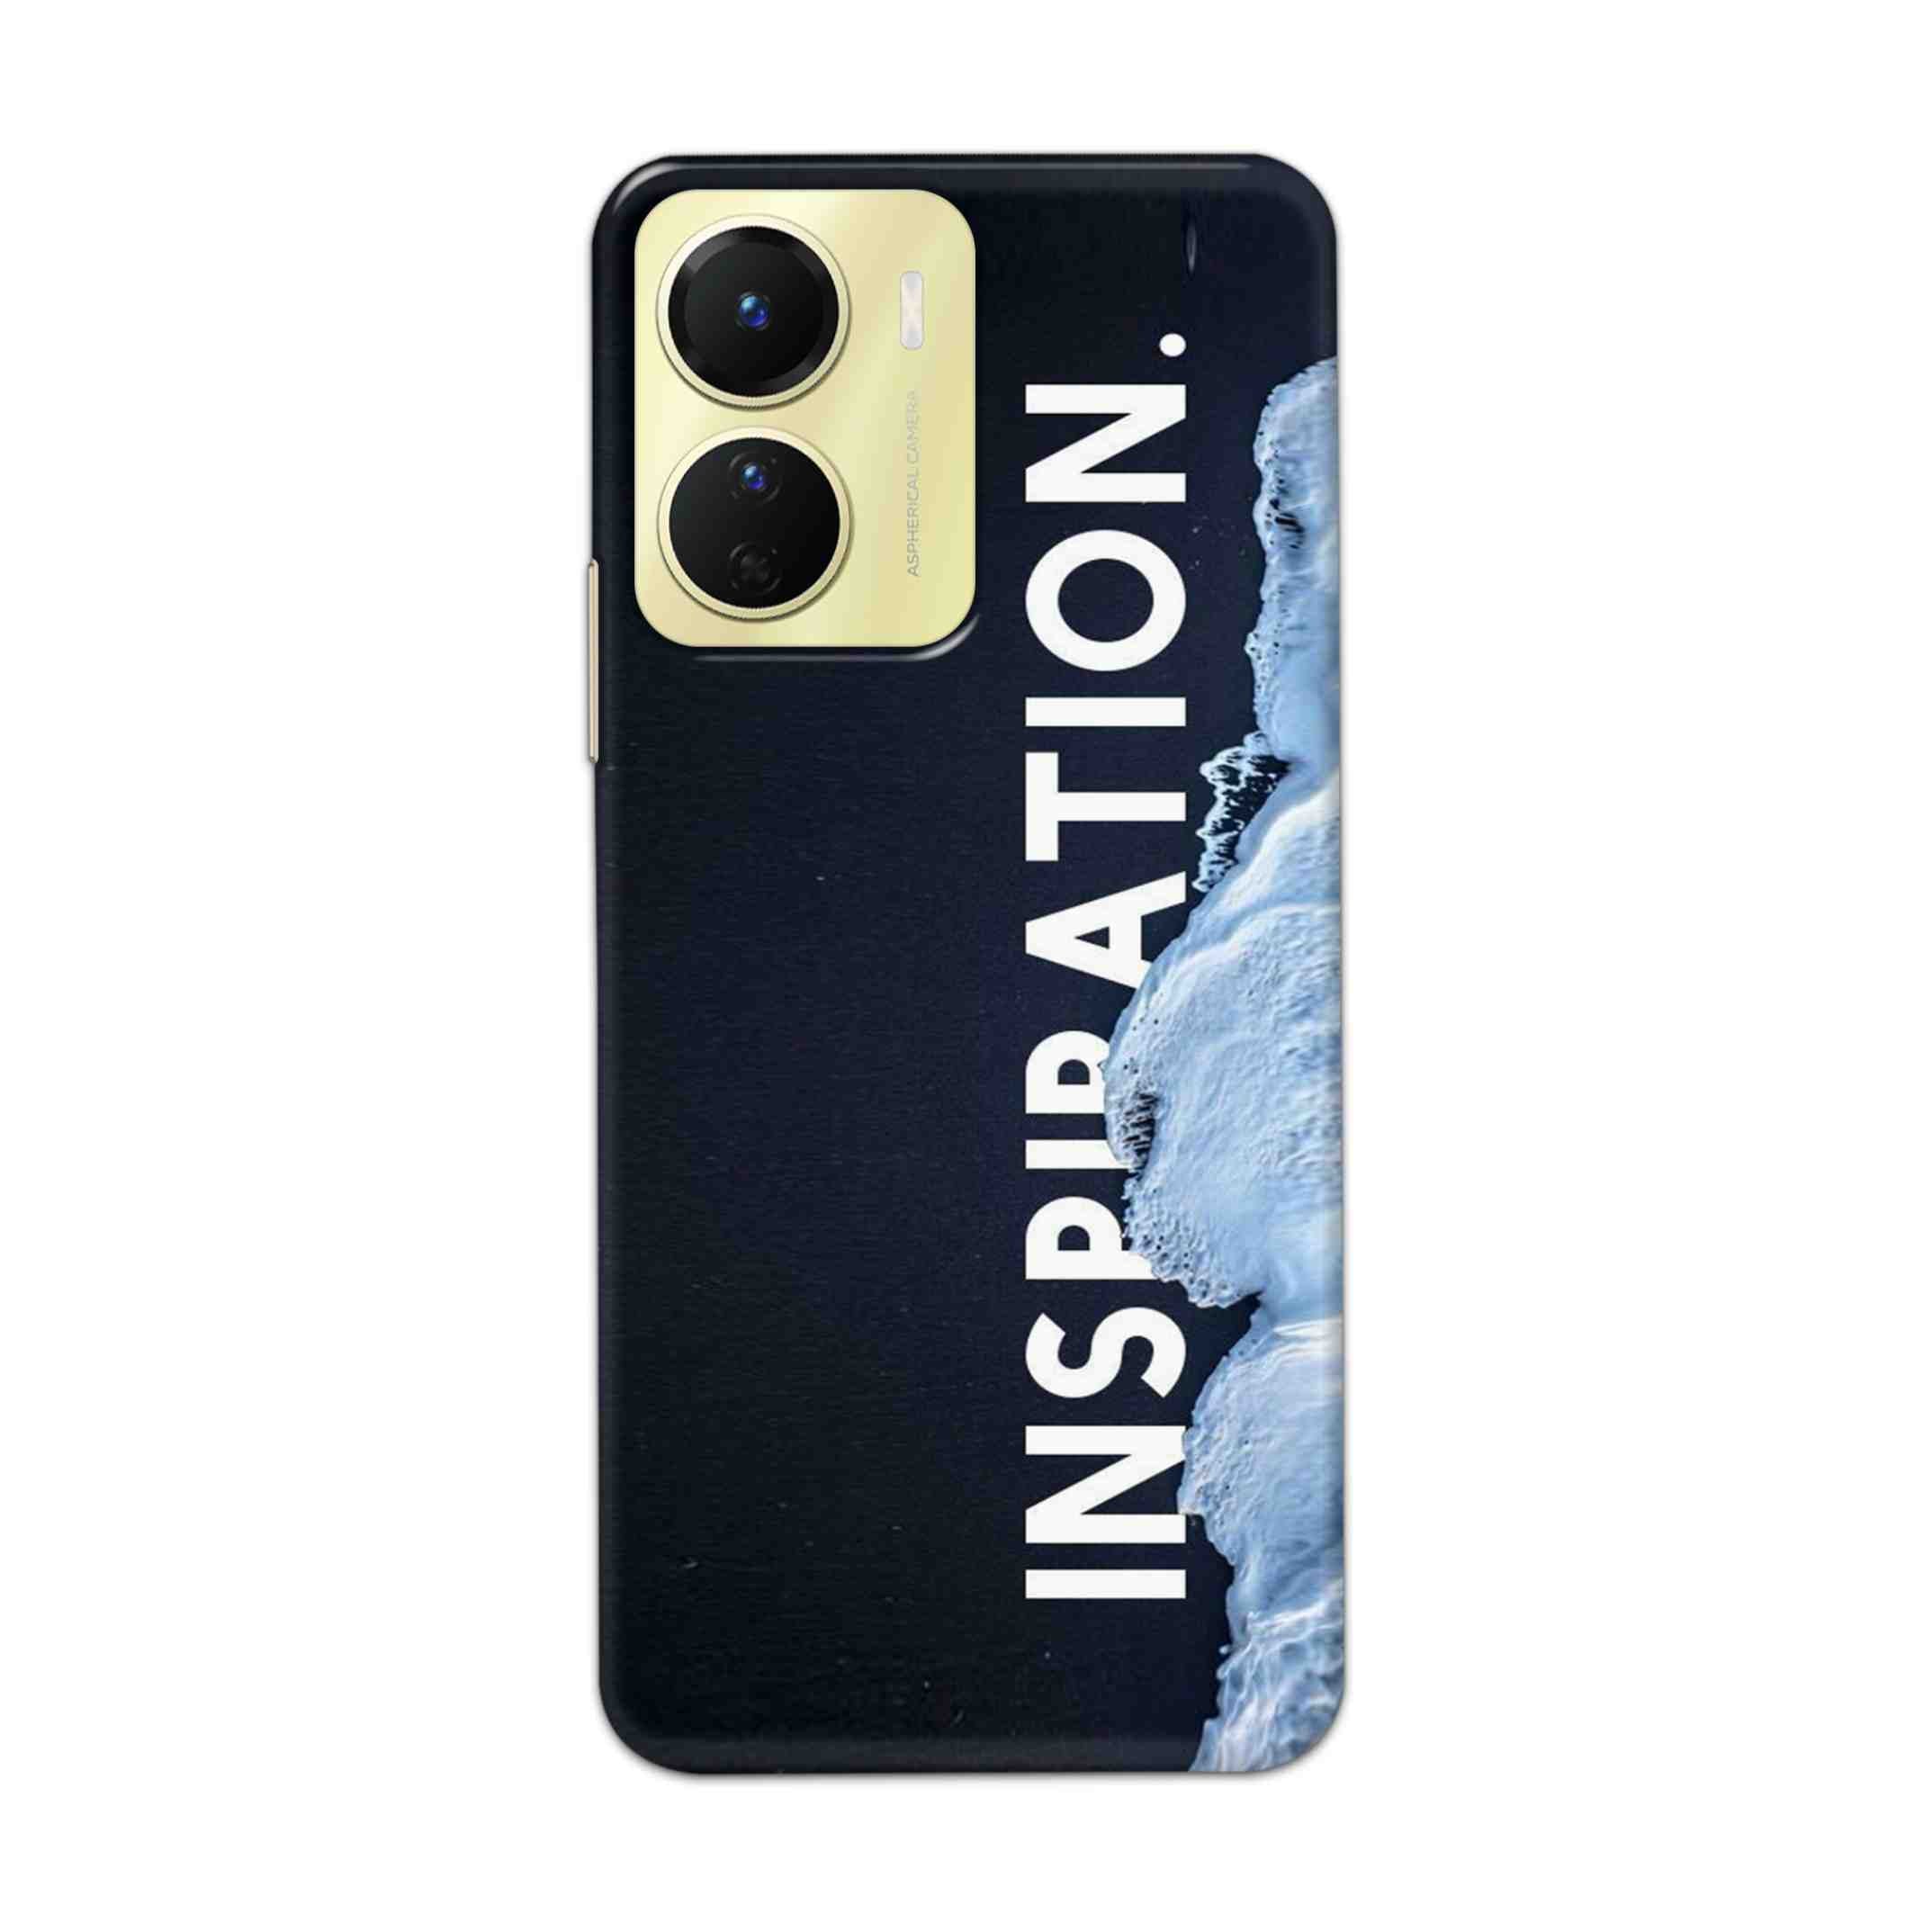 Buy Inspiration Hard Back Mobile Phone Case Cover For Vivo Y16 Online